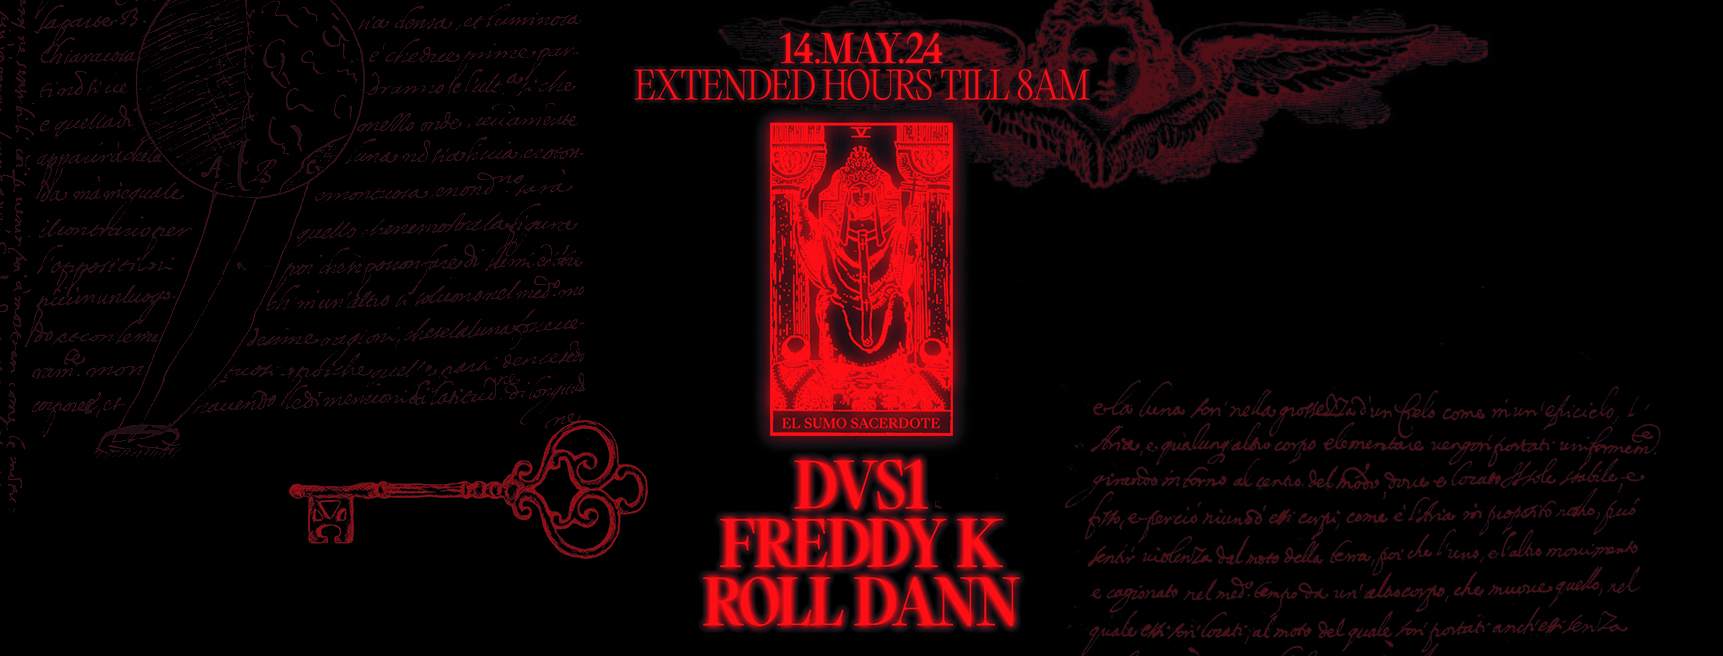 Laster presenta LA TRILOGÍA vol. II: DVS1, Freddy K & Roll Dann [EXTENDED HOURS TILL 8AM] - Página frontal